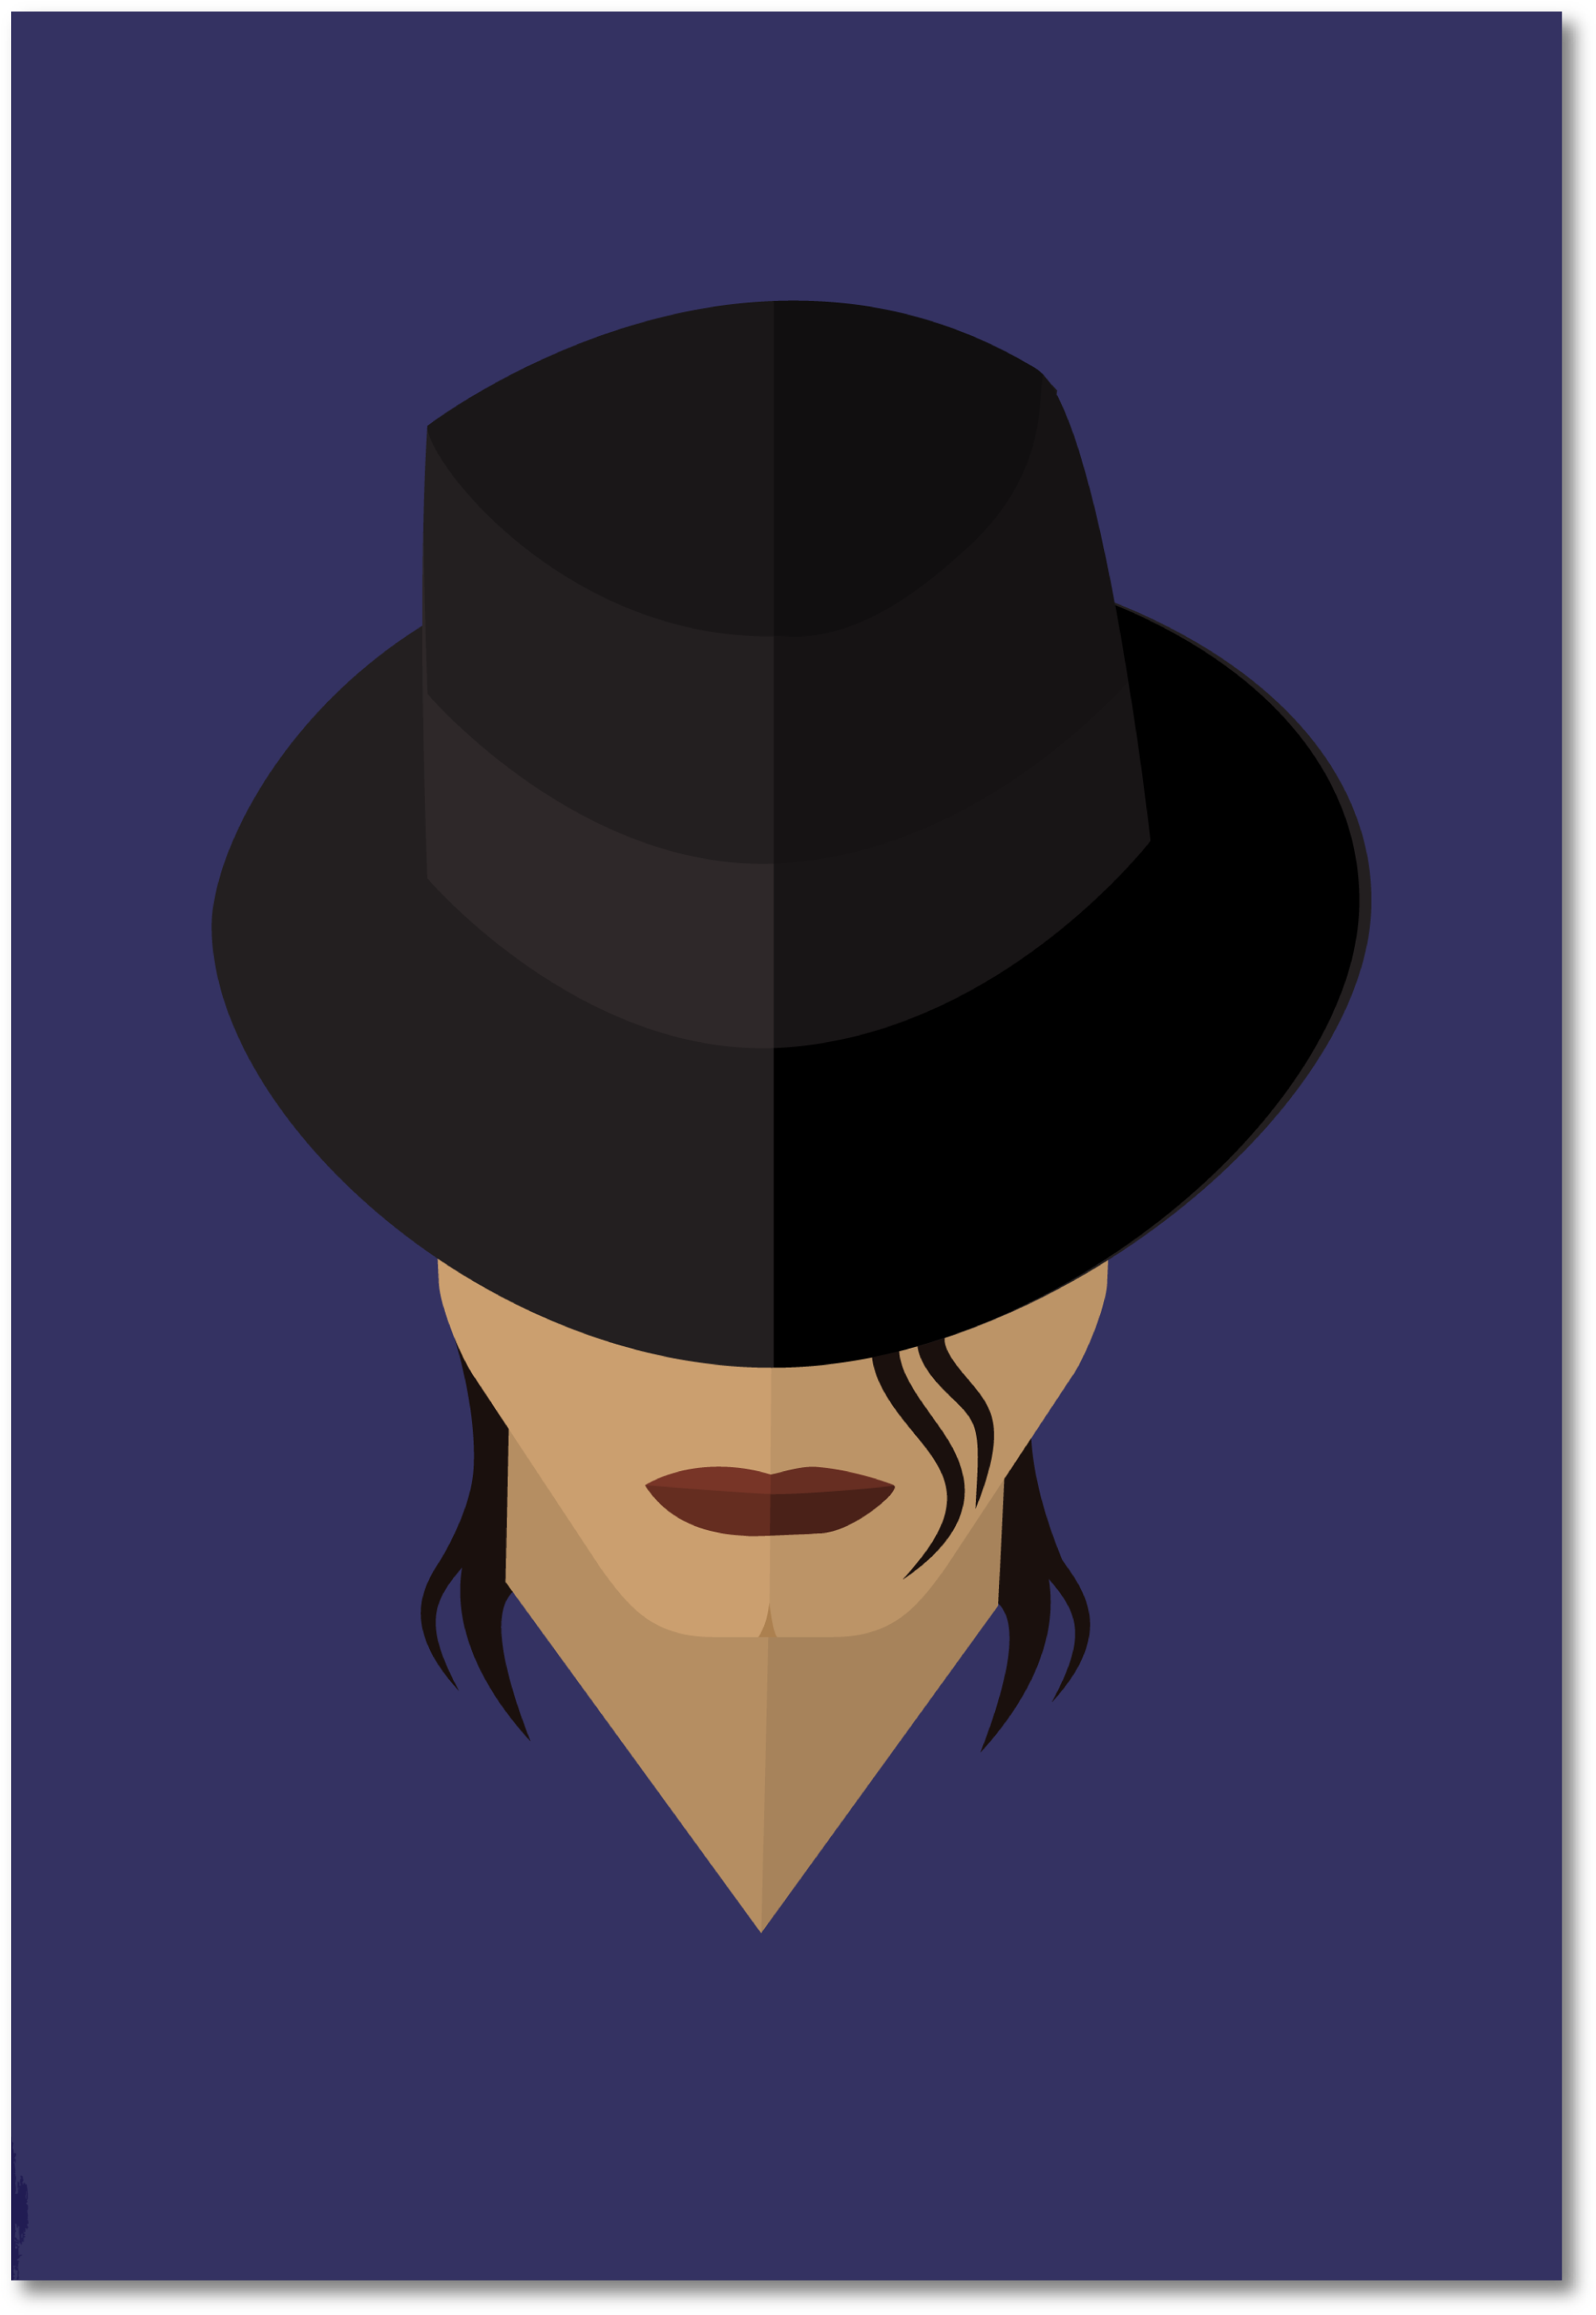 A Woman Wearing A Hat